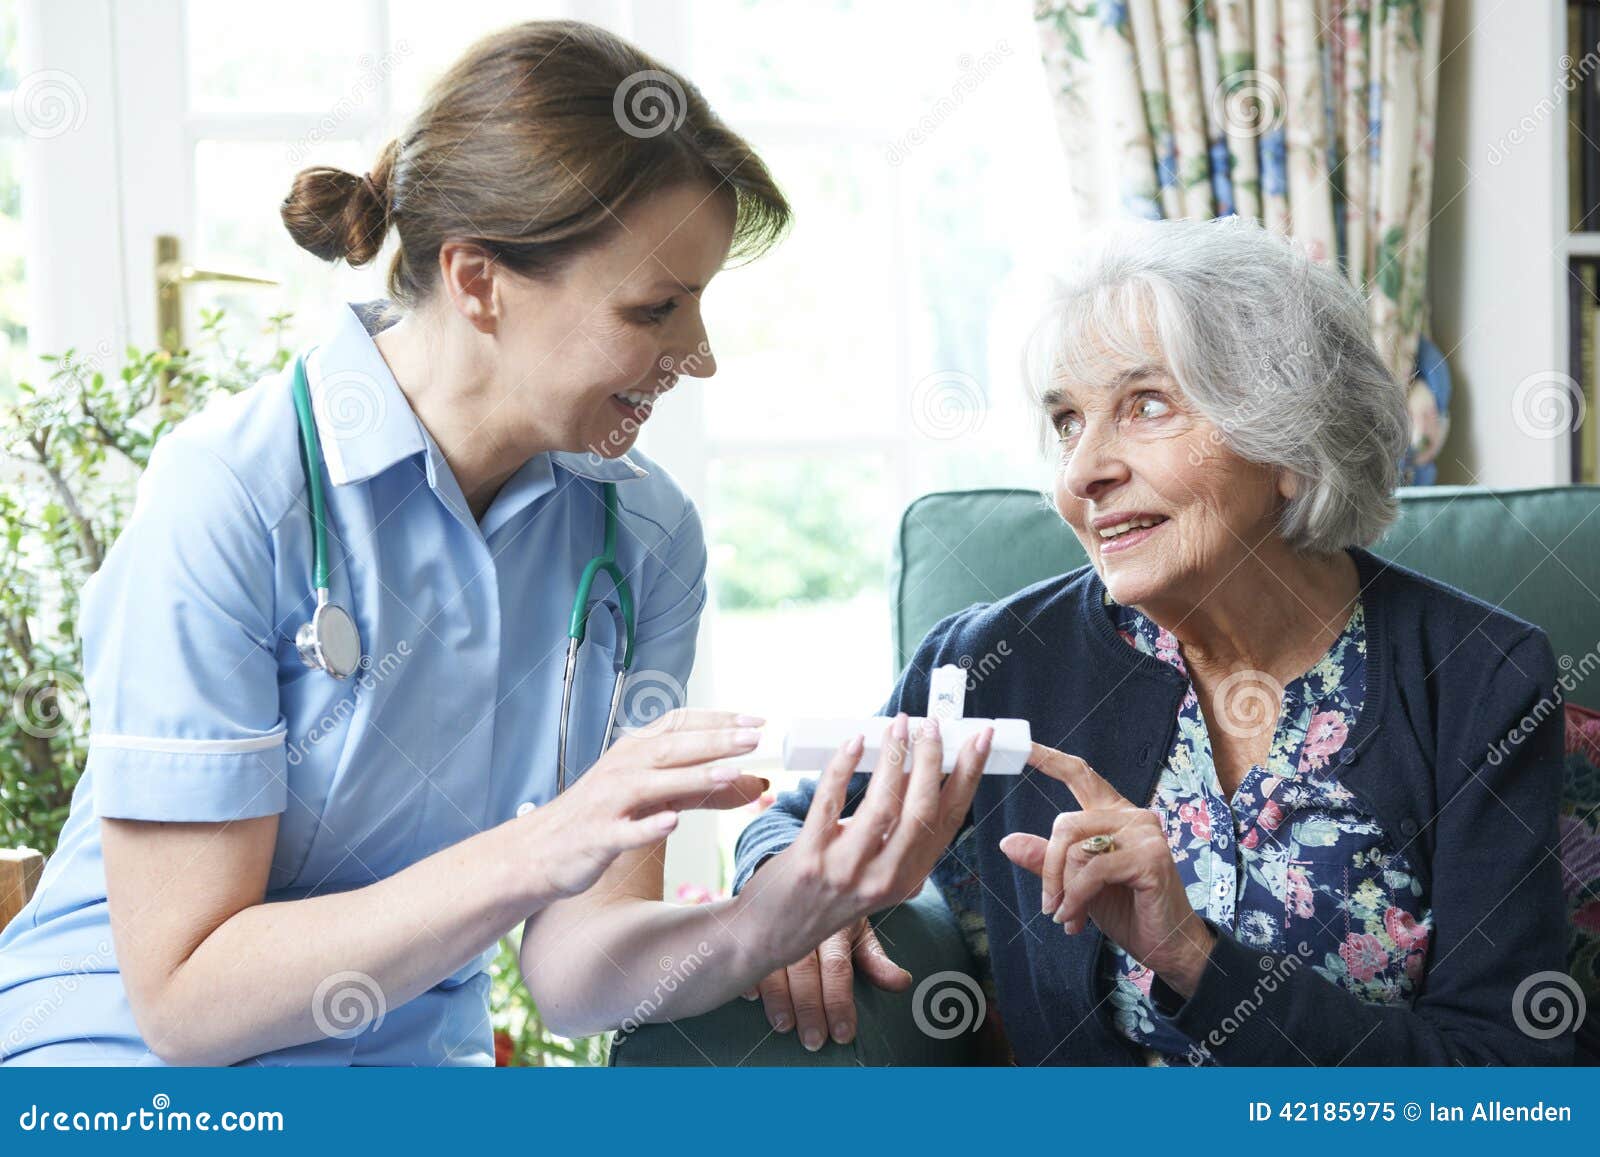 nurse advising senior woman on medication at home